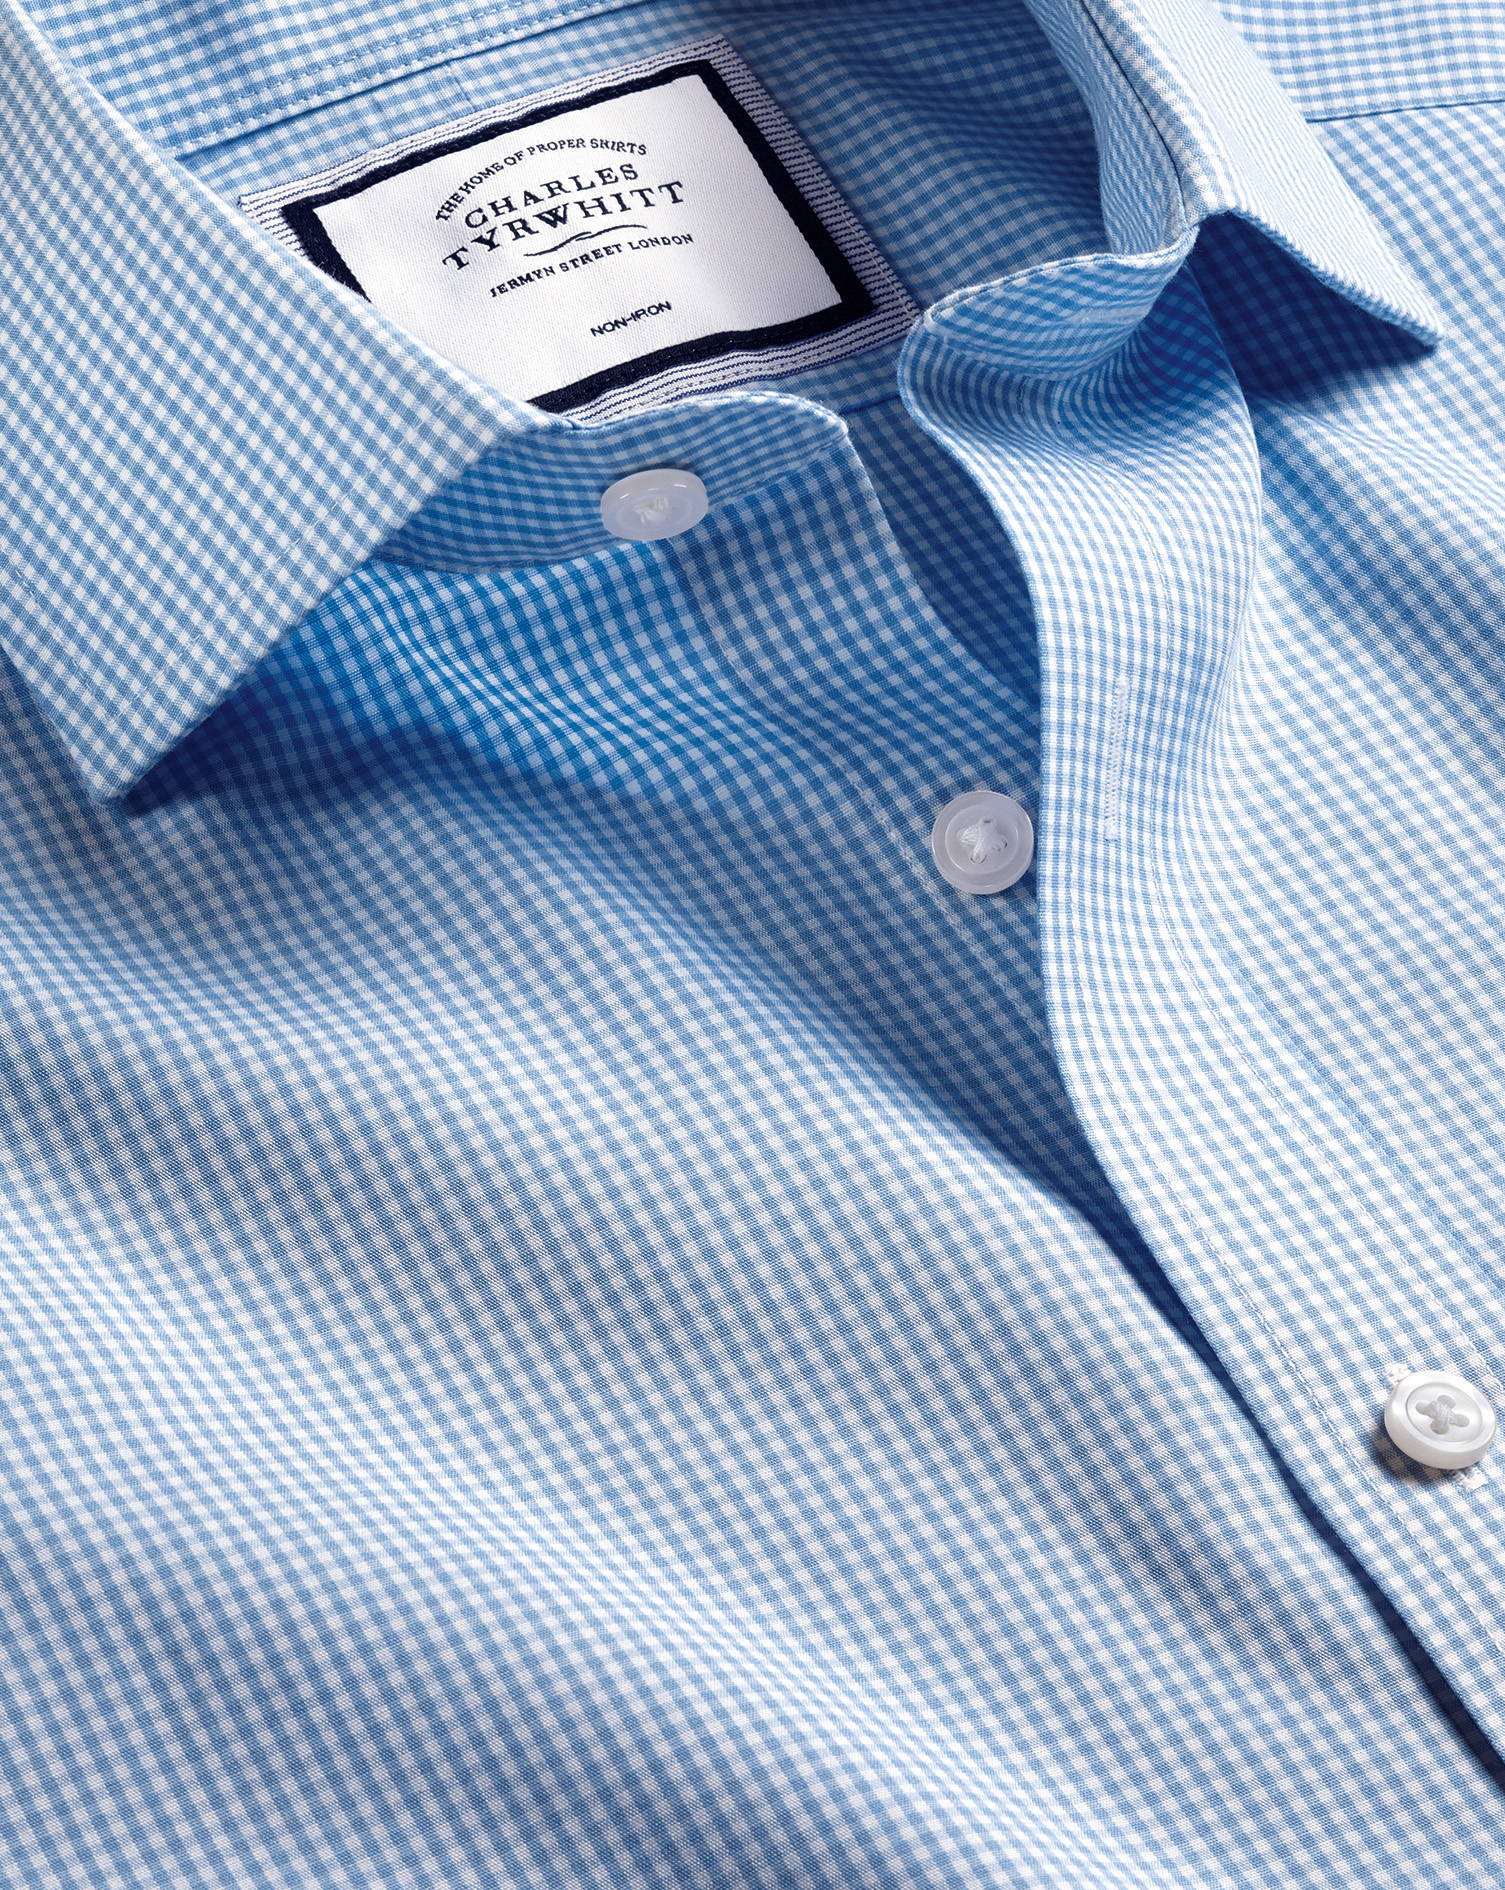 Cutaway Collar Non-Iron Mini Gingham Check Cotton Dress Shirt - Cornflower Blue Single Cuff Size 16/